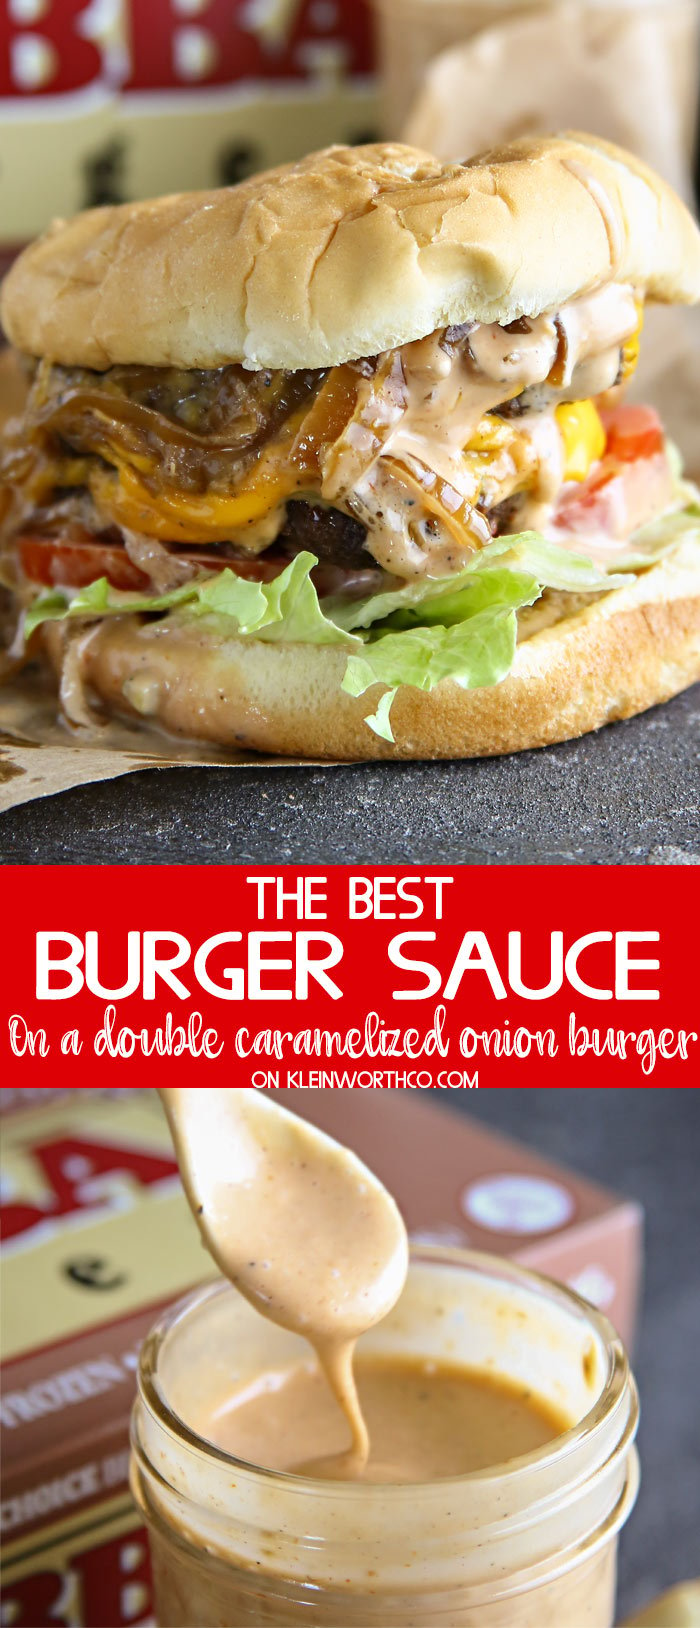 Best Burger Sauce on a Double Caramelized Onion Burger